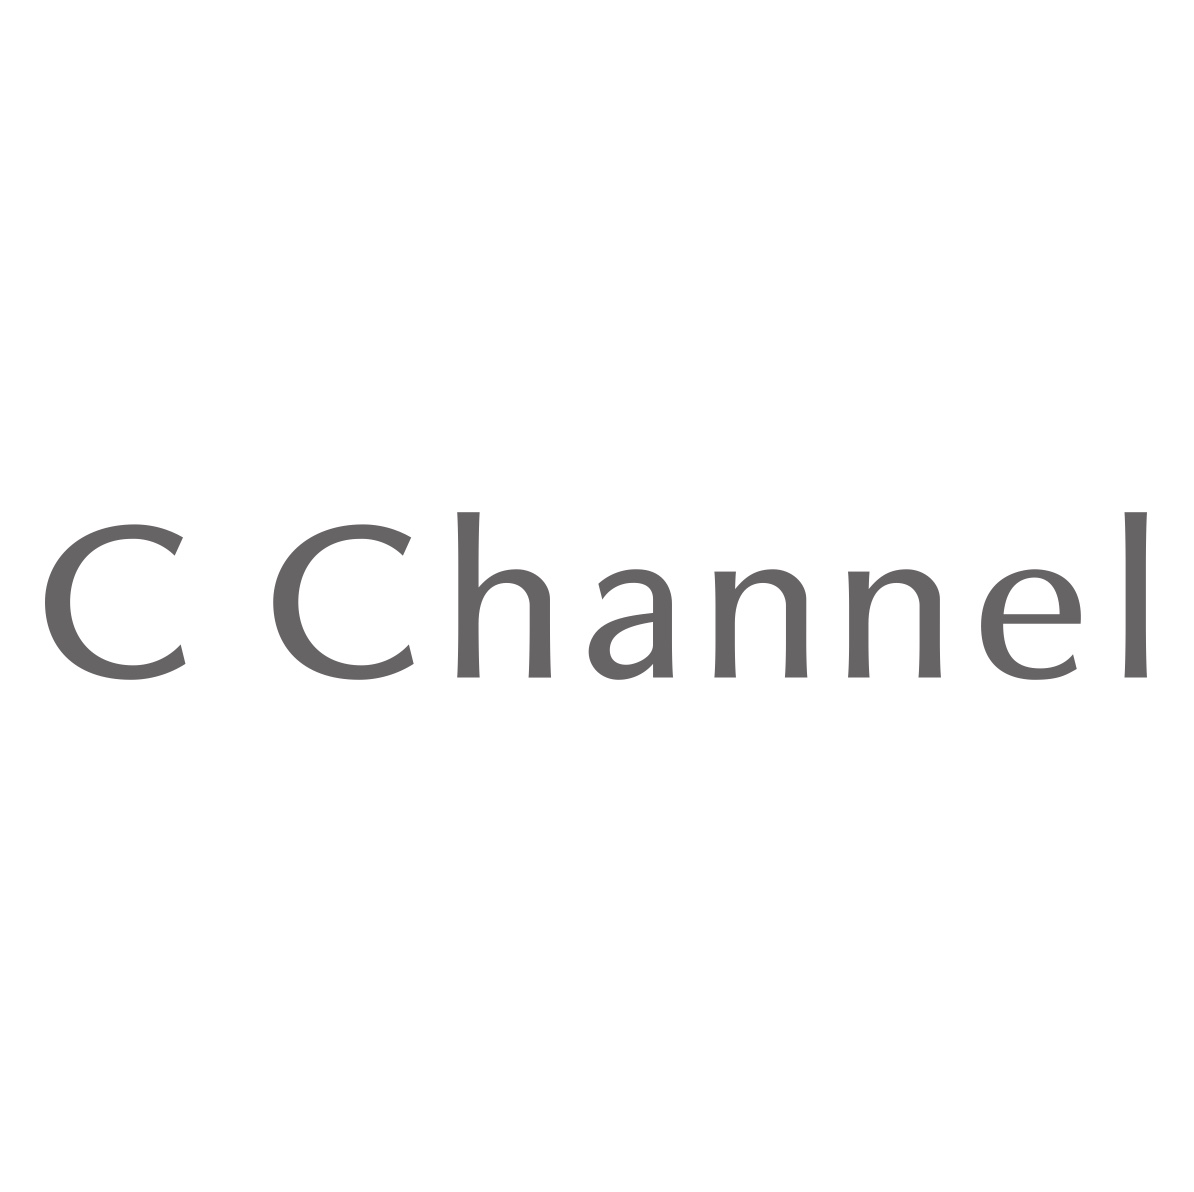 C Channel株式会社企業ロゴ